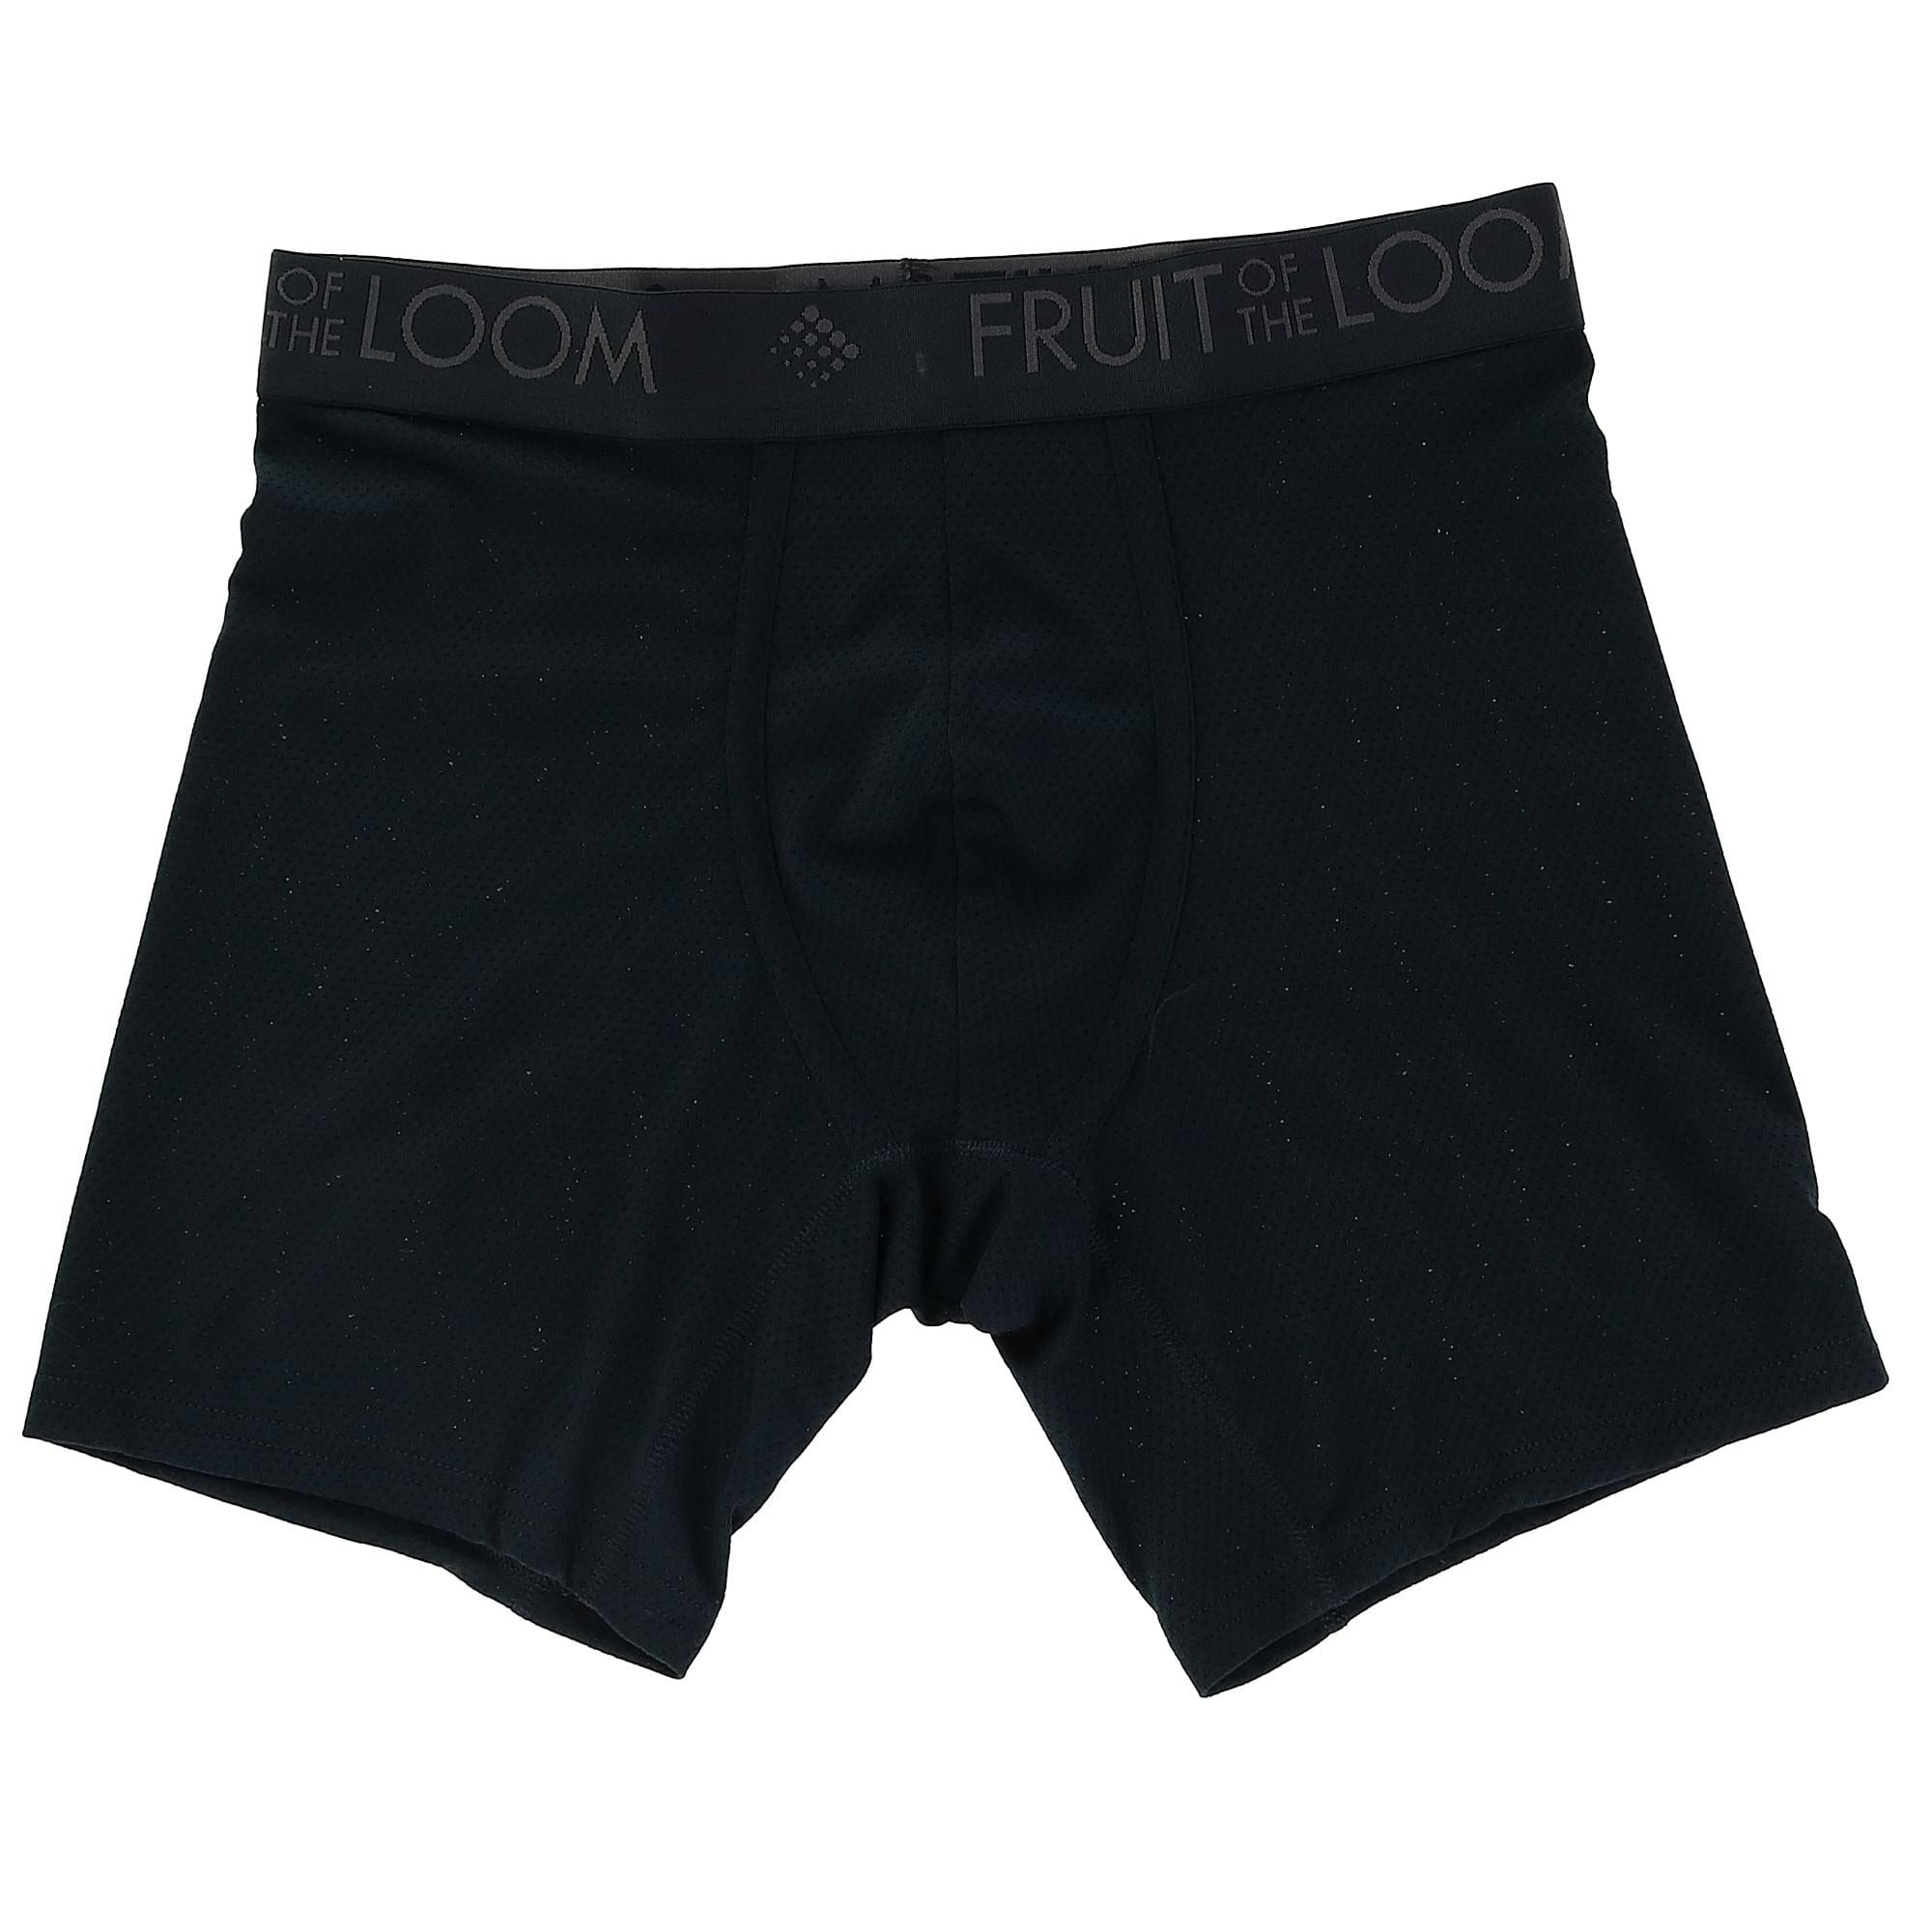 Fruit of the Loom Men's Breathable Cotton Boxer Briefs (Regular